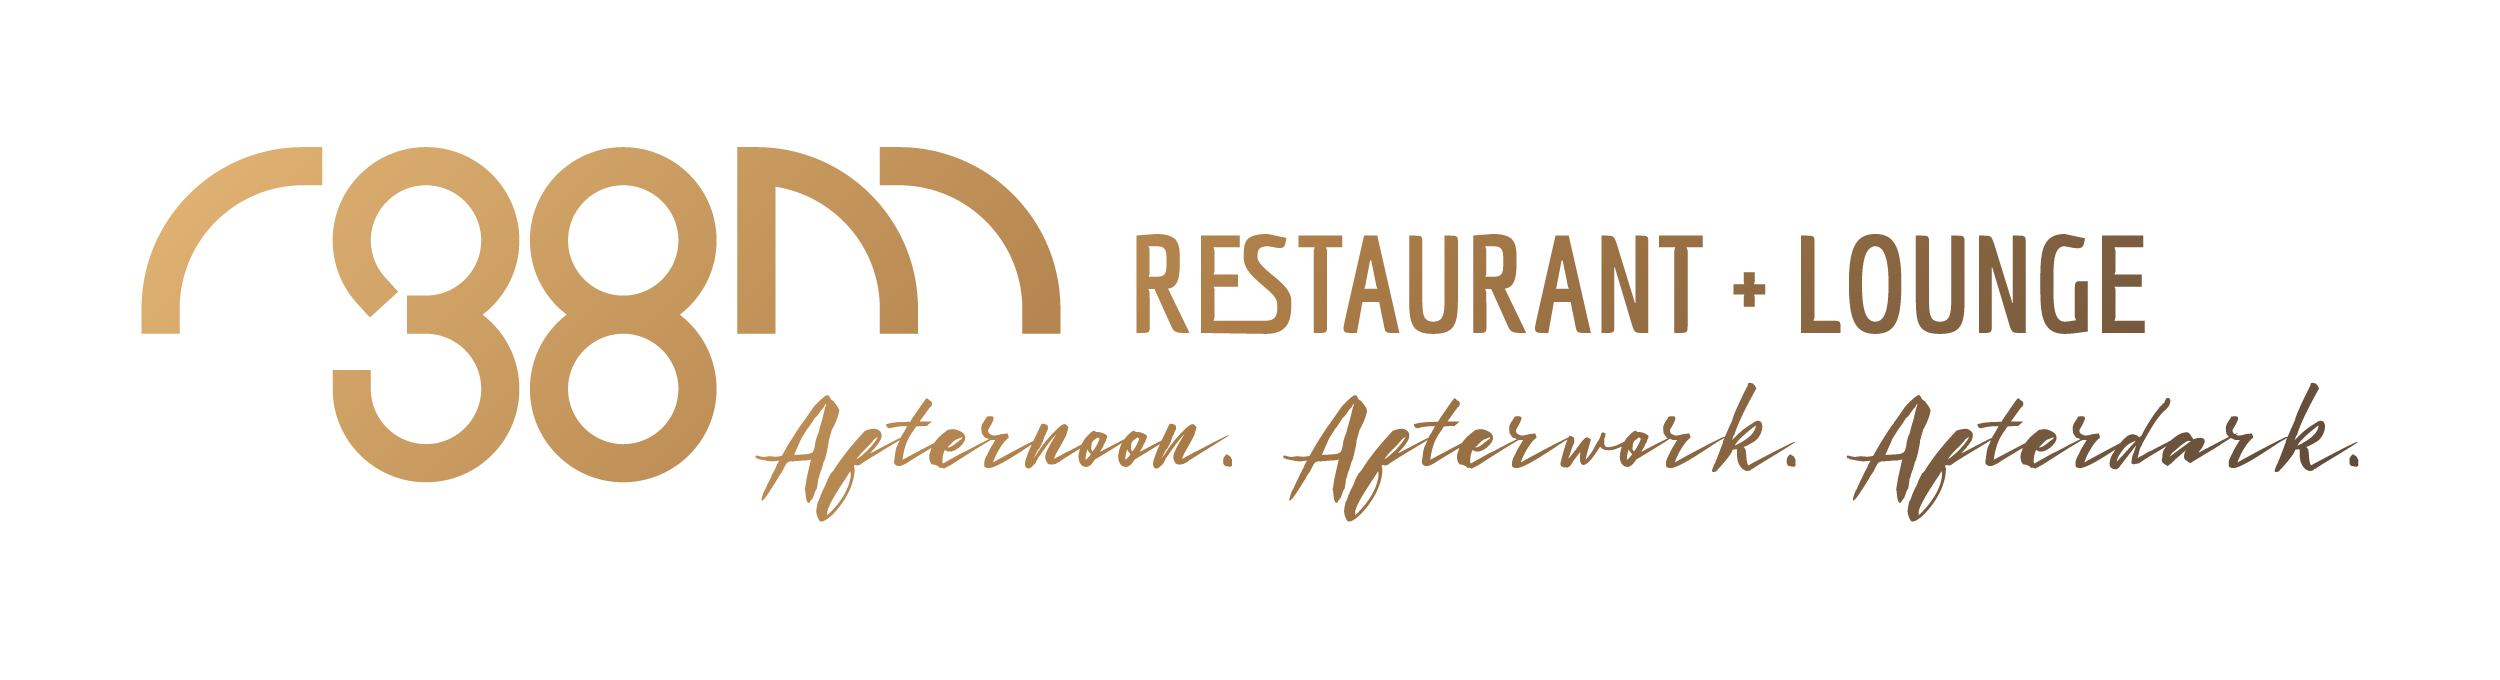 Sponsor: Room 38 Restaurant and Lounge